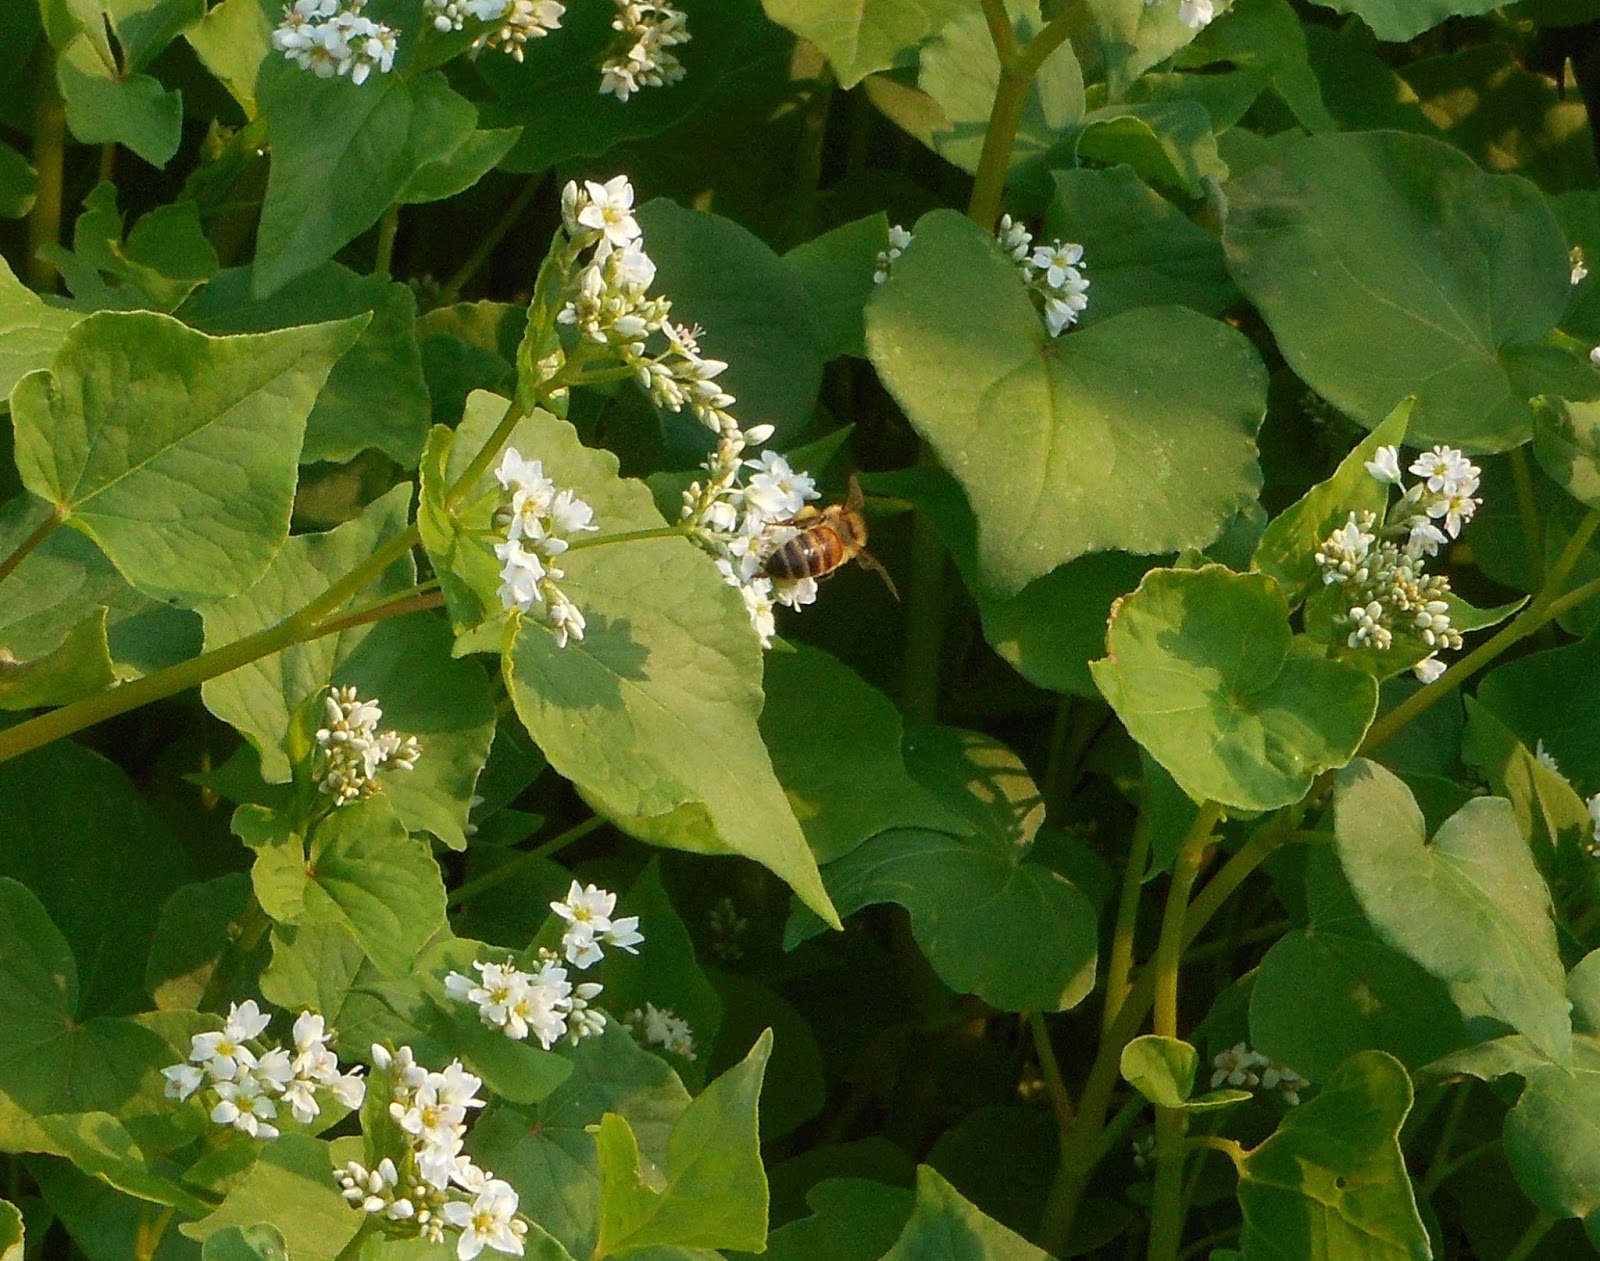 Buckwheat flower with honeybee